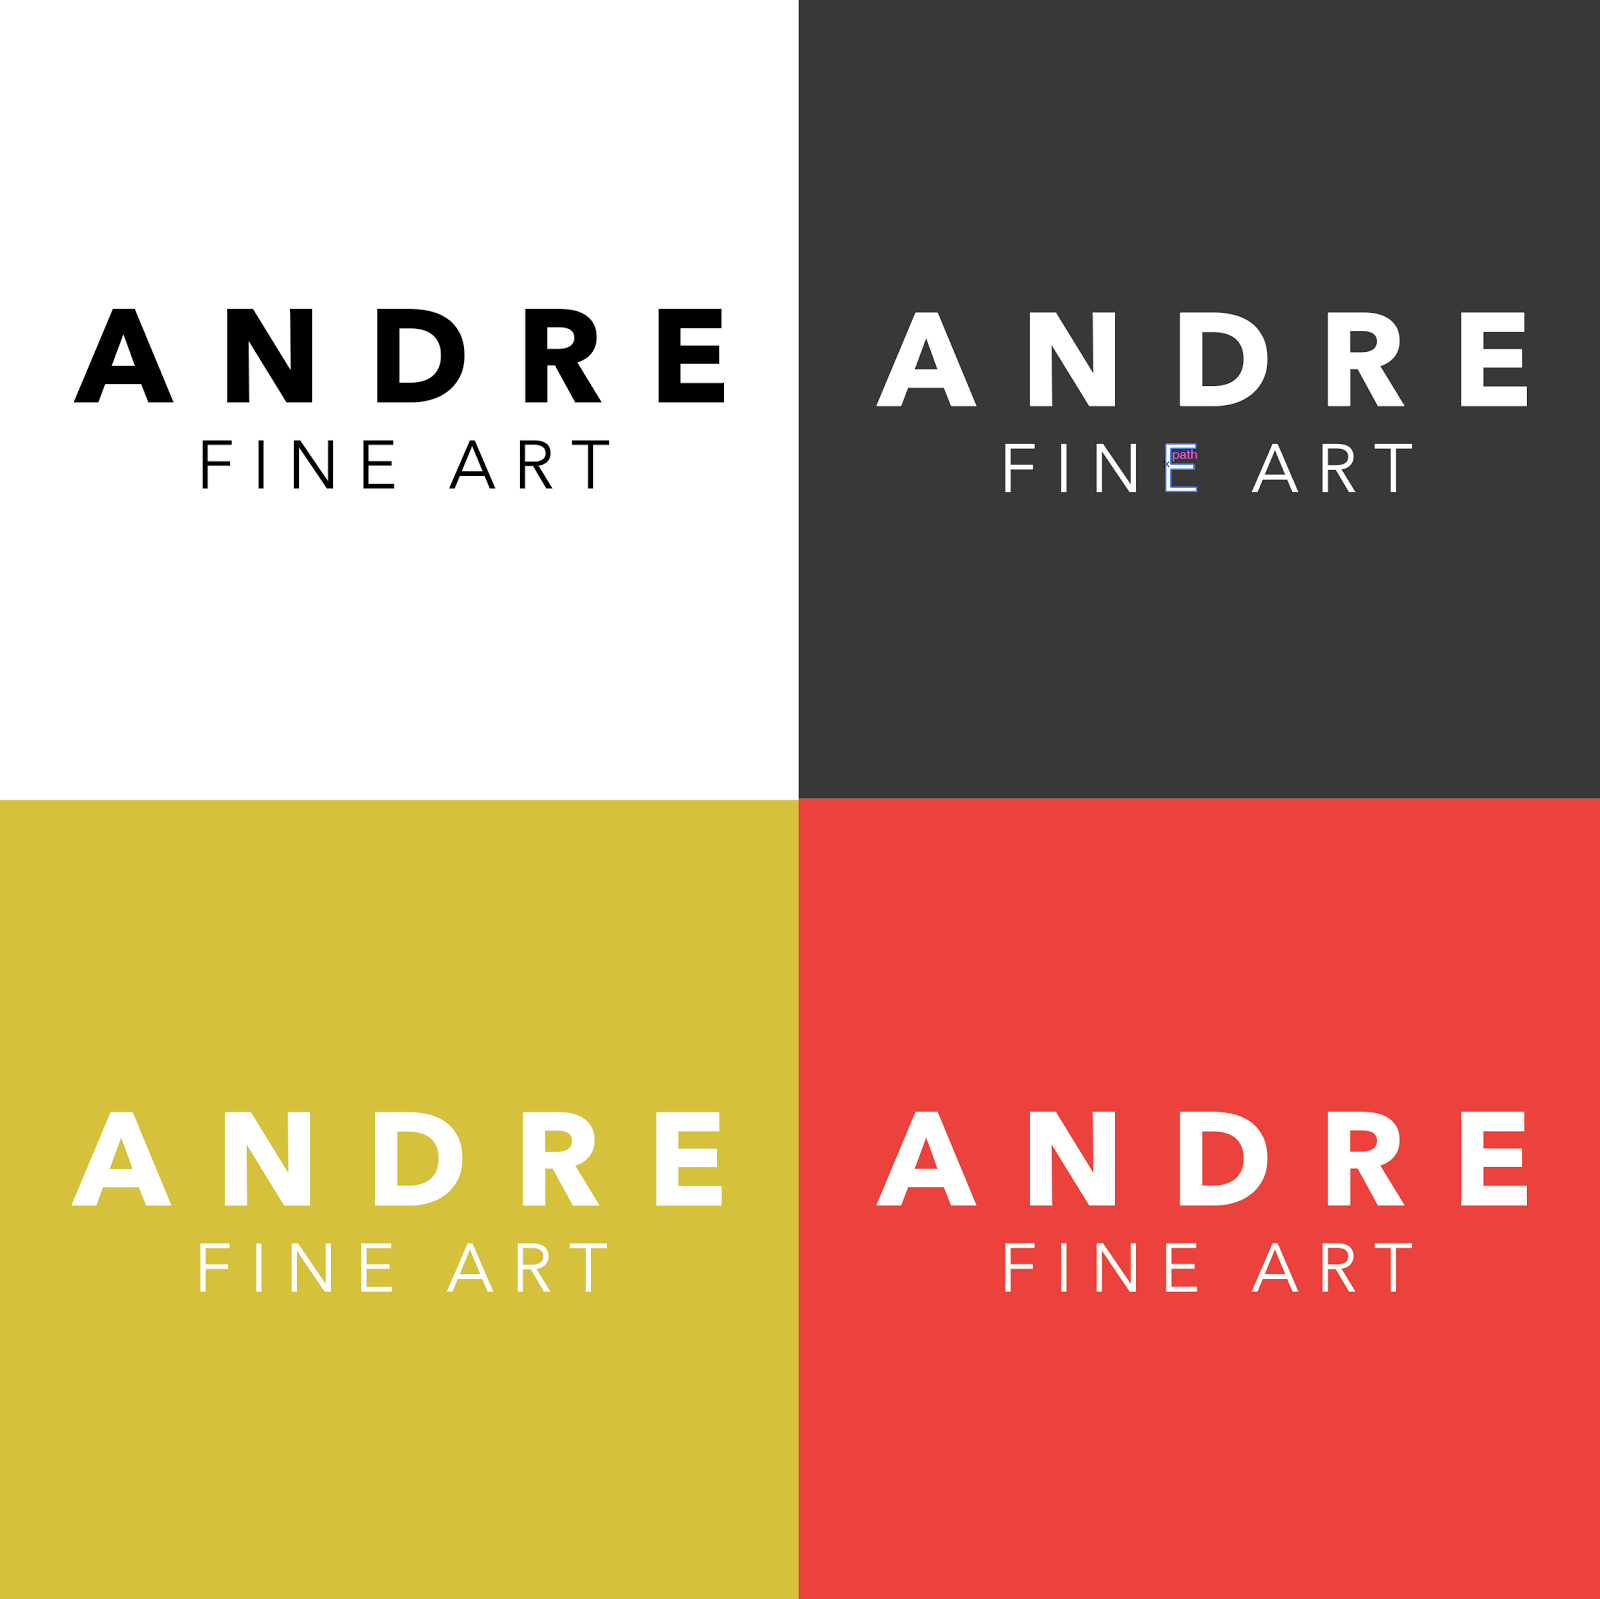 Andre Art Prints